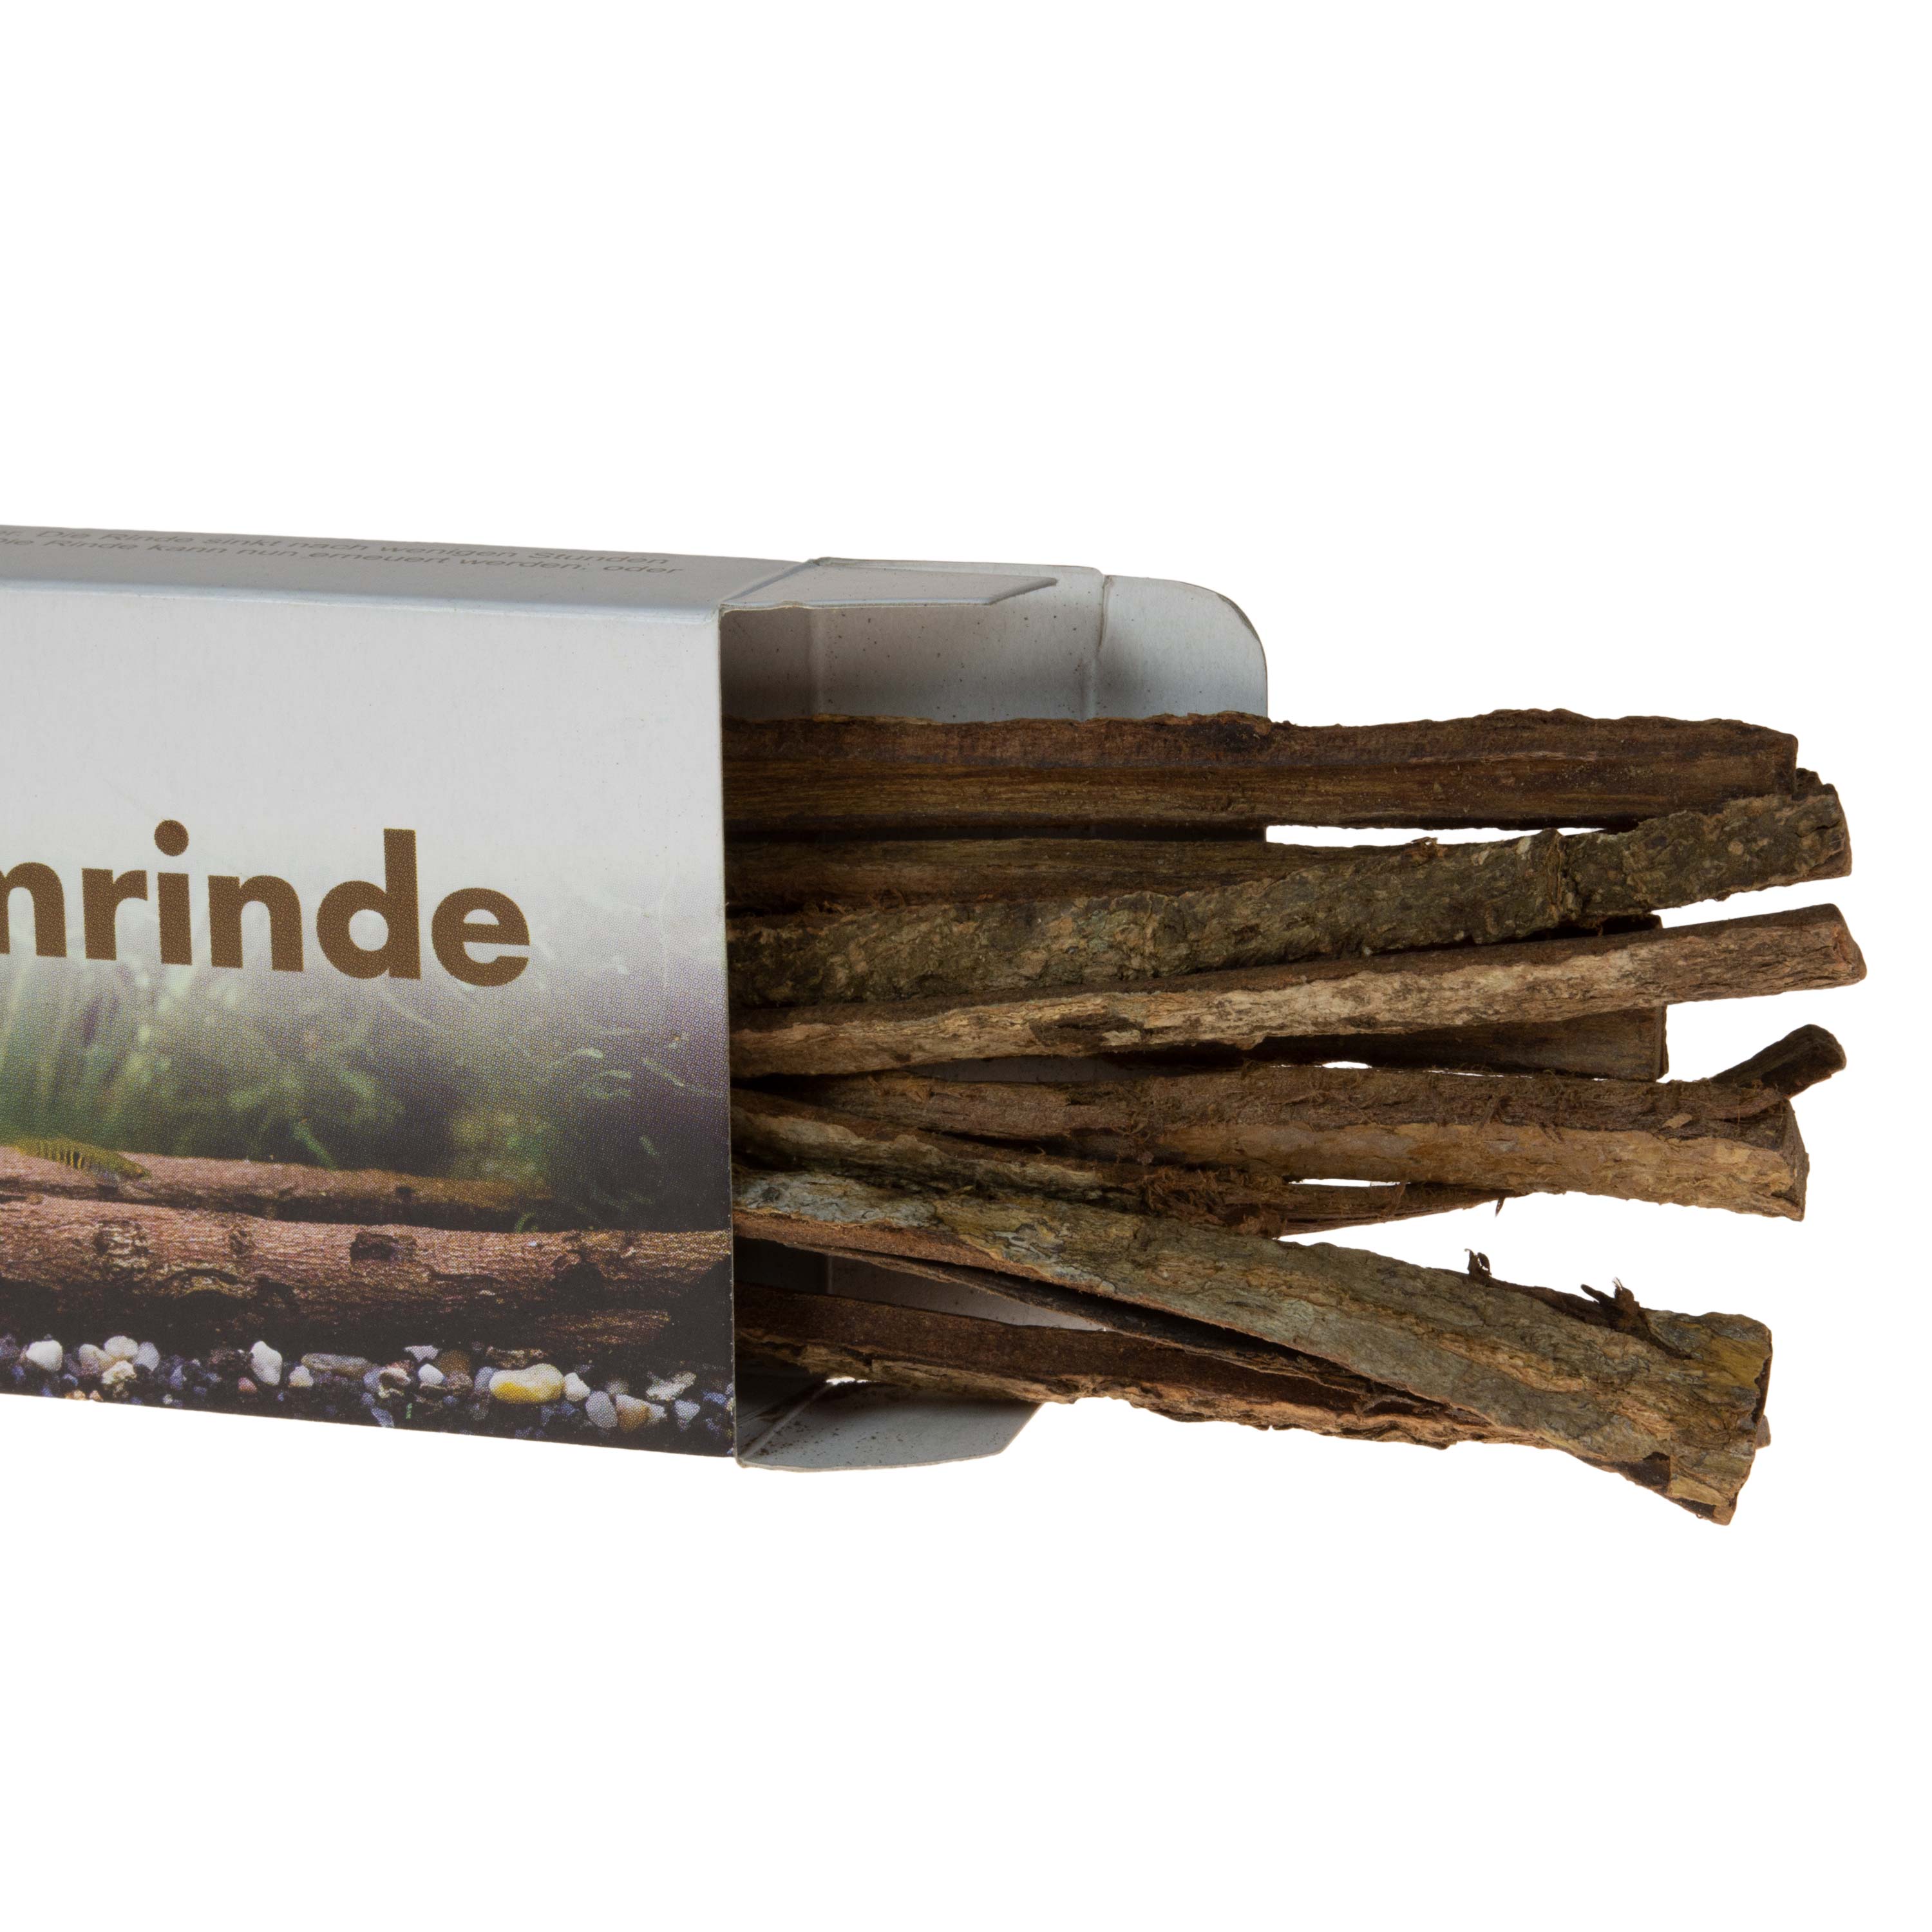 Standard Tropical Almond Bark aquamax - opened pack